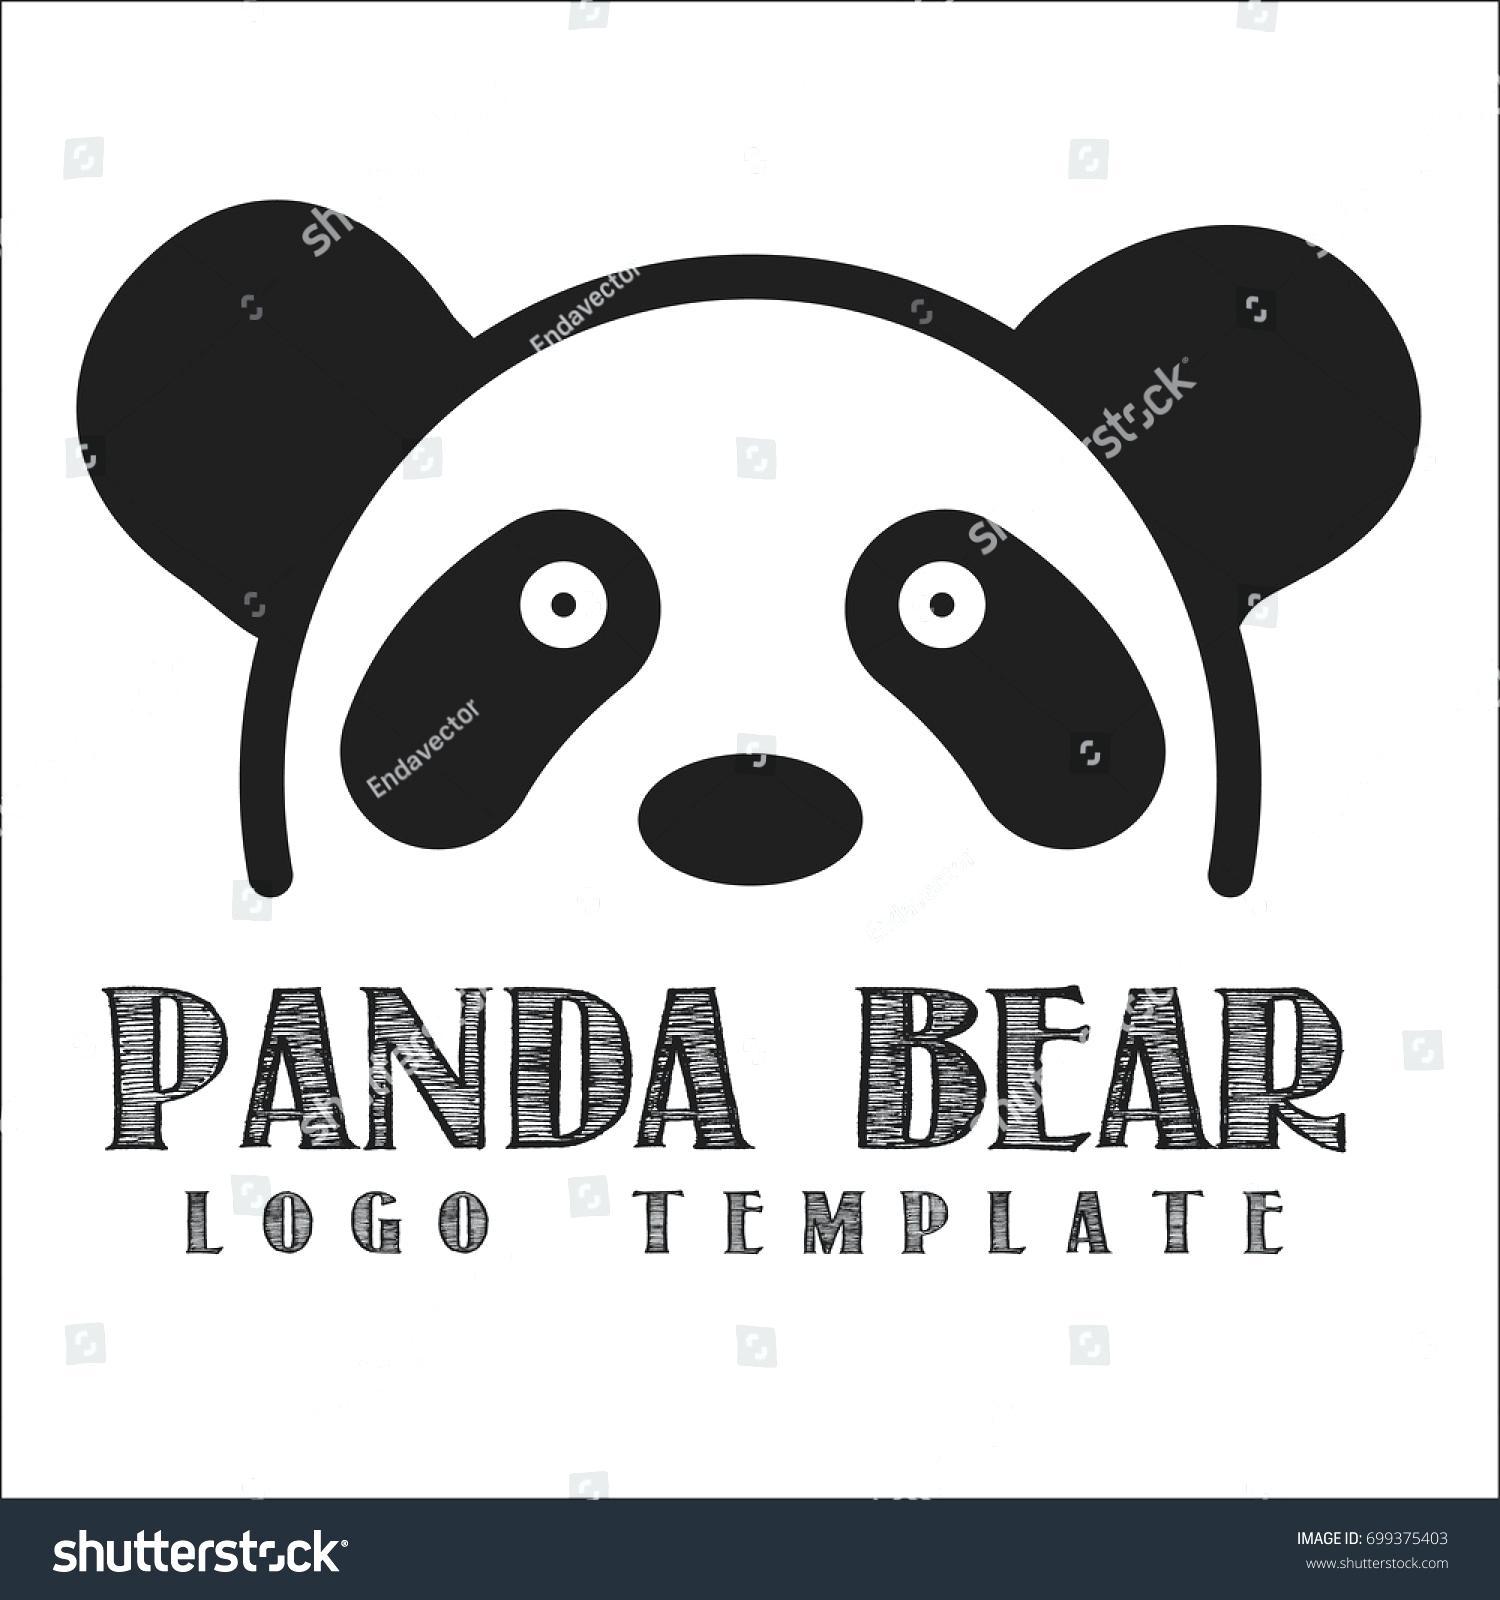 Panda Bear Logo - template: Panda Bear Template Vector Of Fun Children Isolated Geek ...